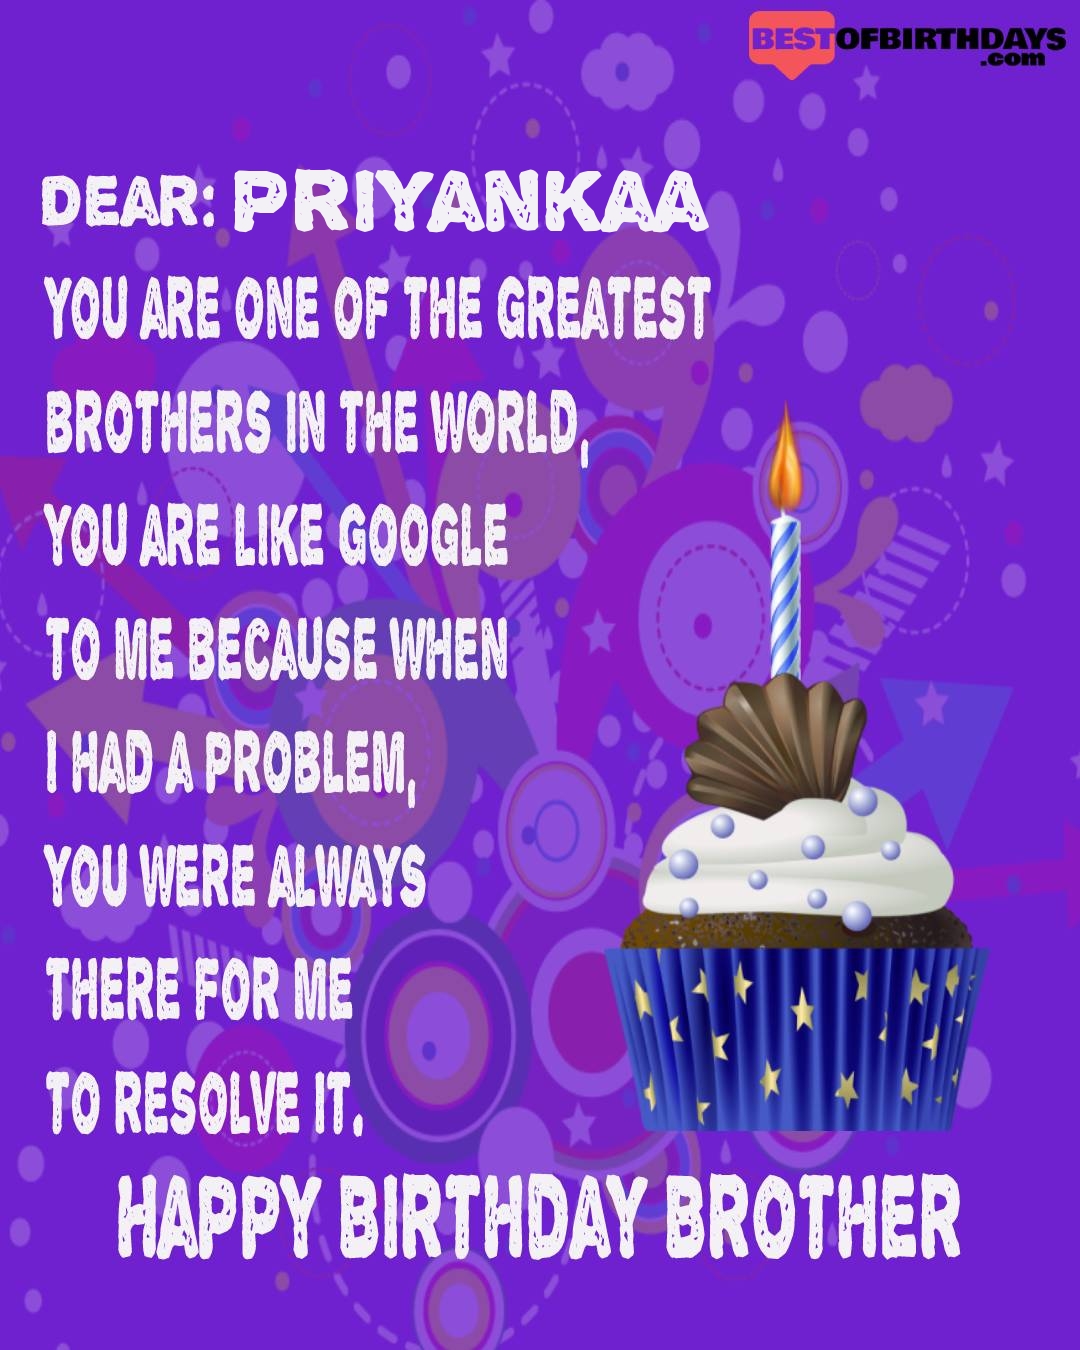 Happy birthday priyankaa bhai brother bro